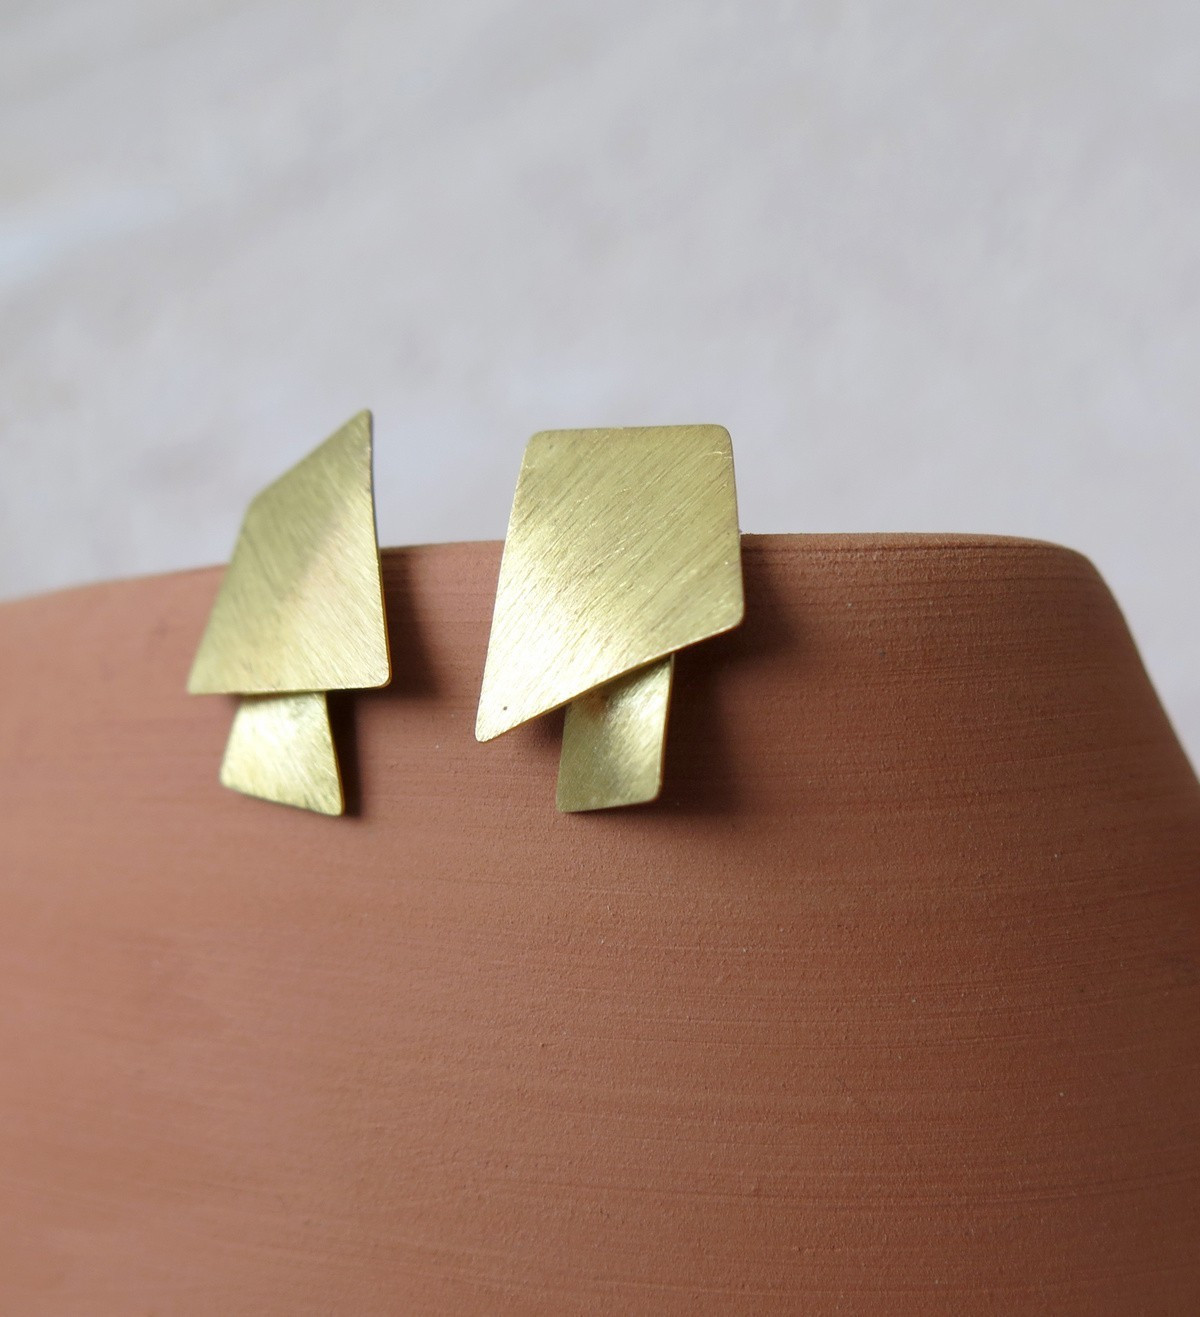 18k gold earrings Aire 20mm